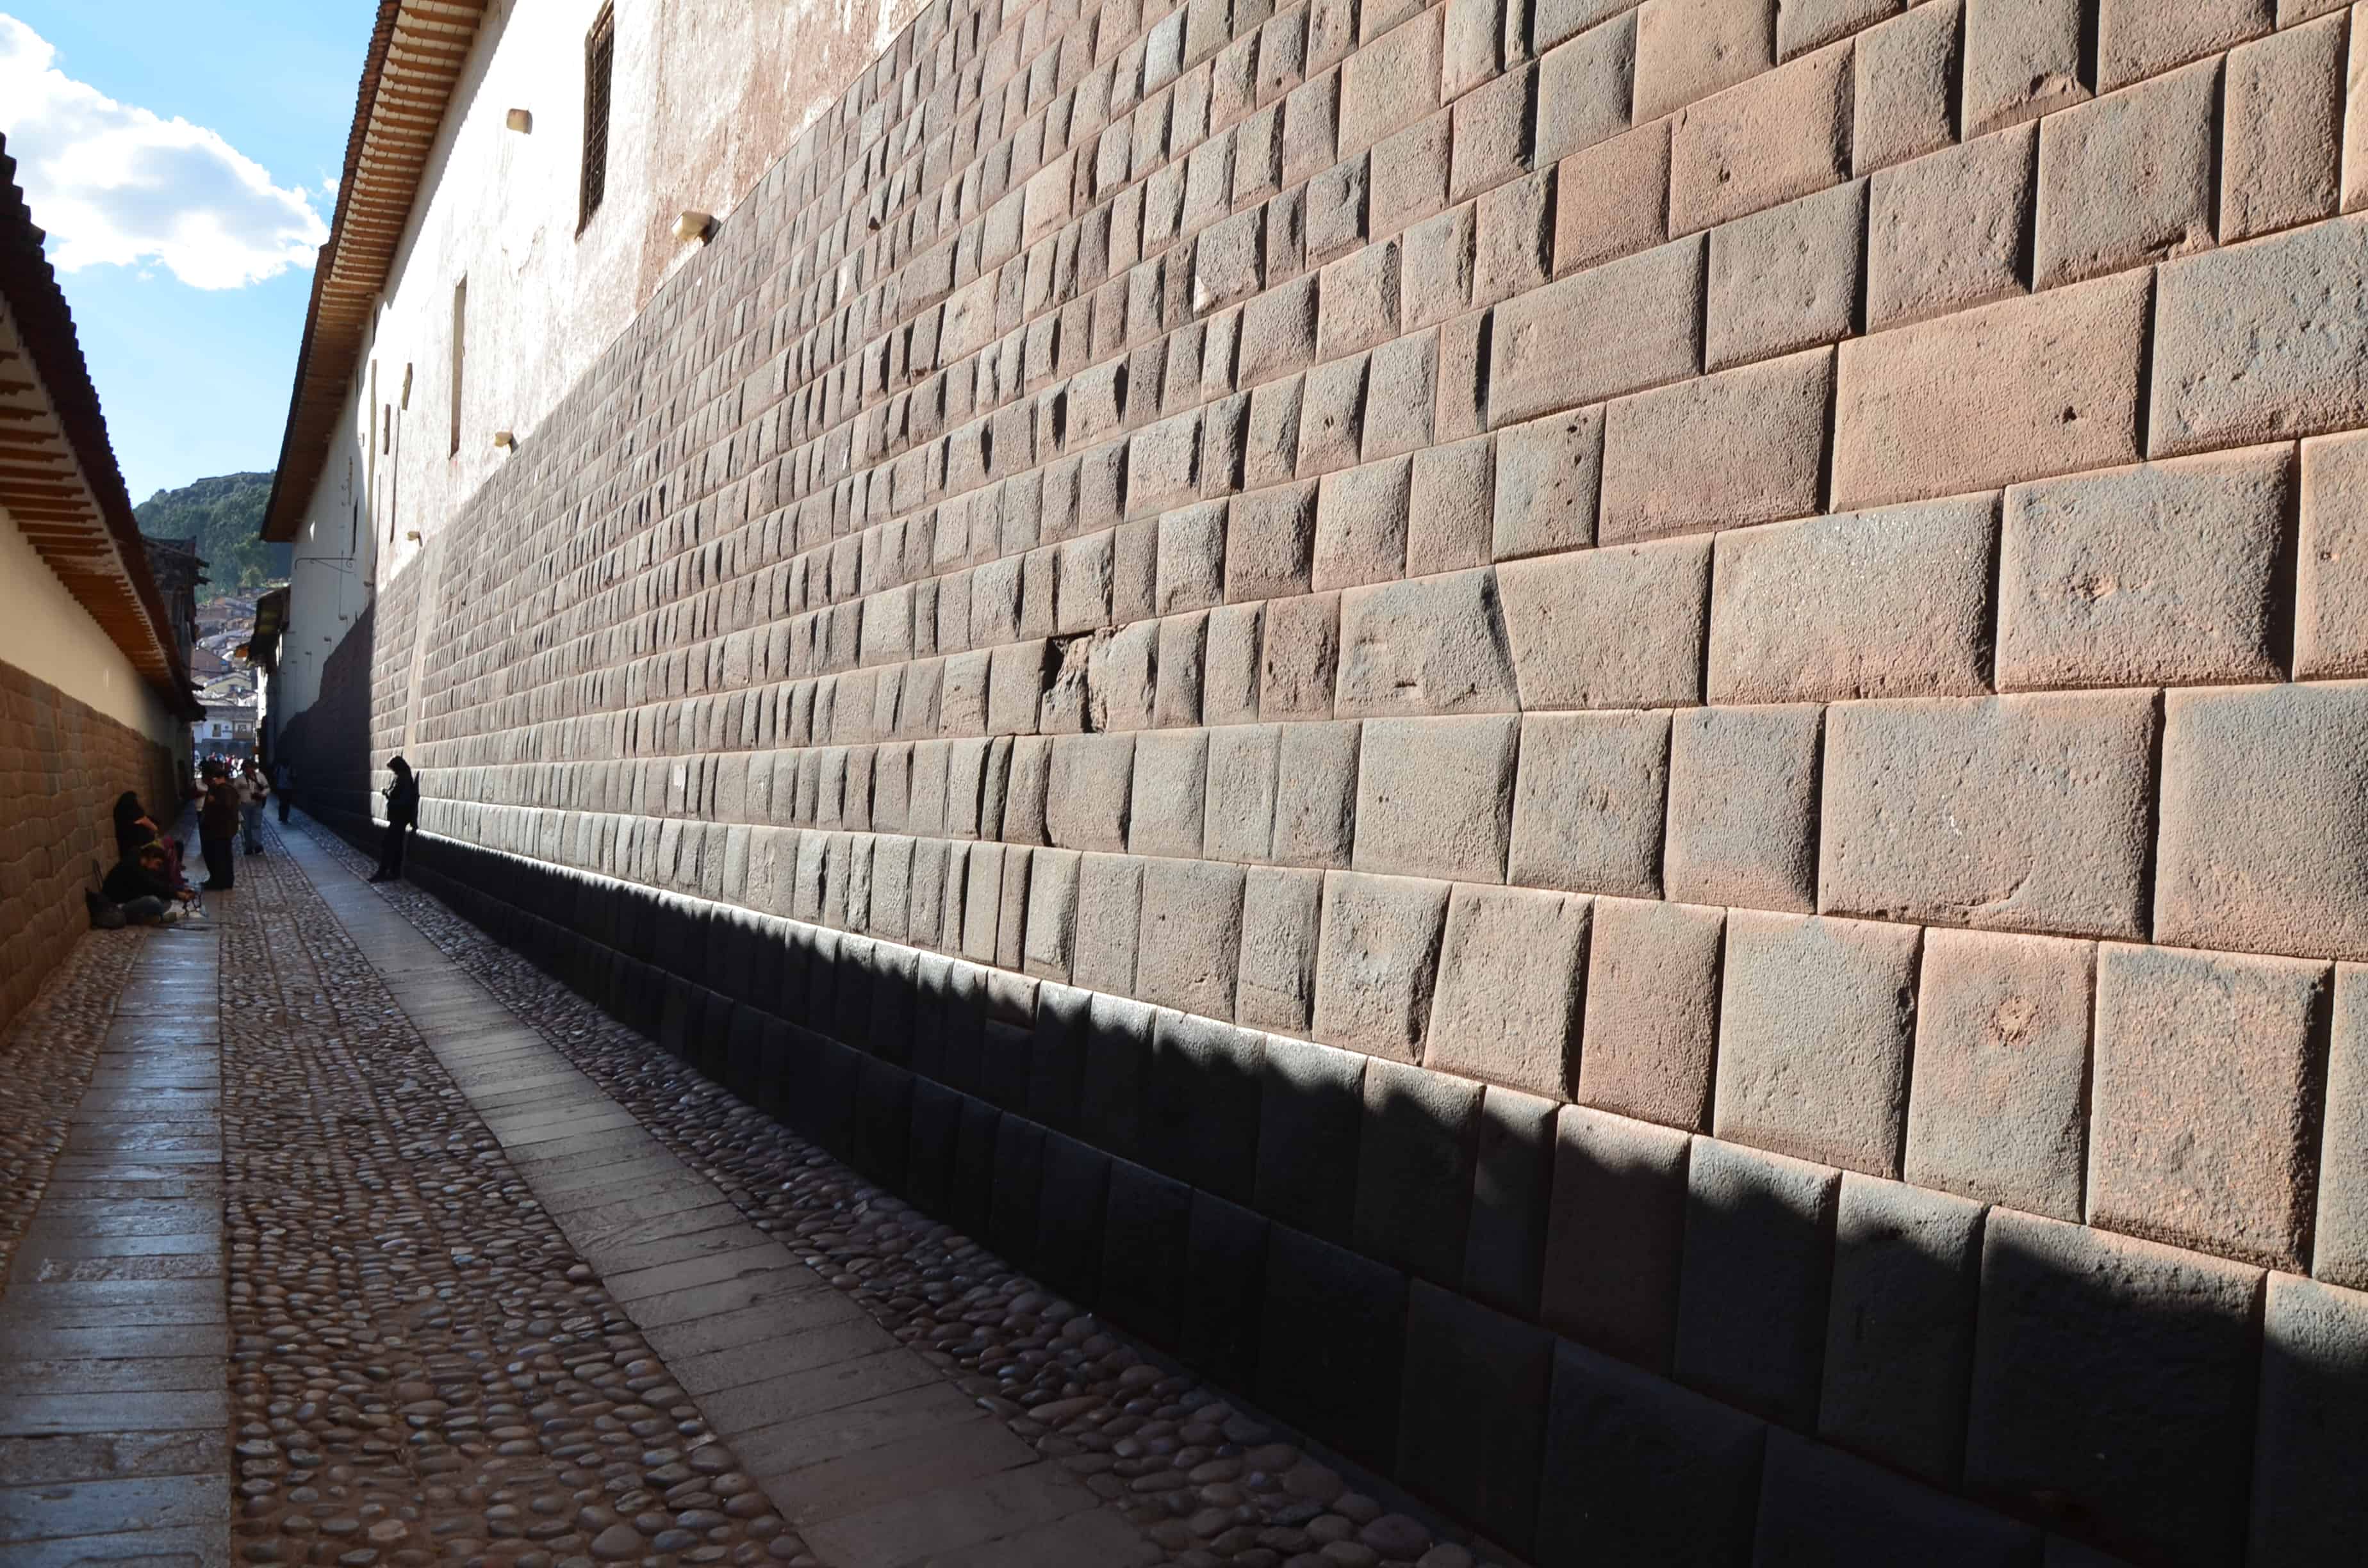 Incan wall of the House of the Chosen Women on Convento Santa Catalina de Sena in Cusco, Peru